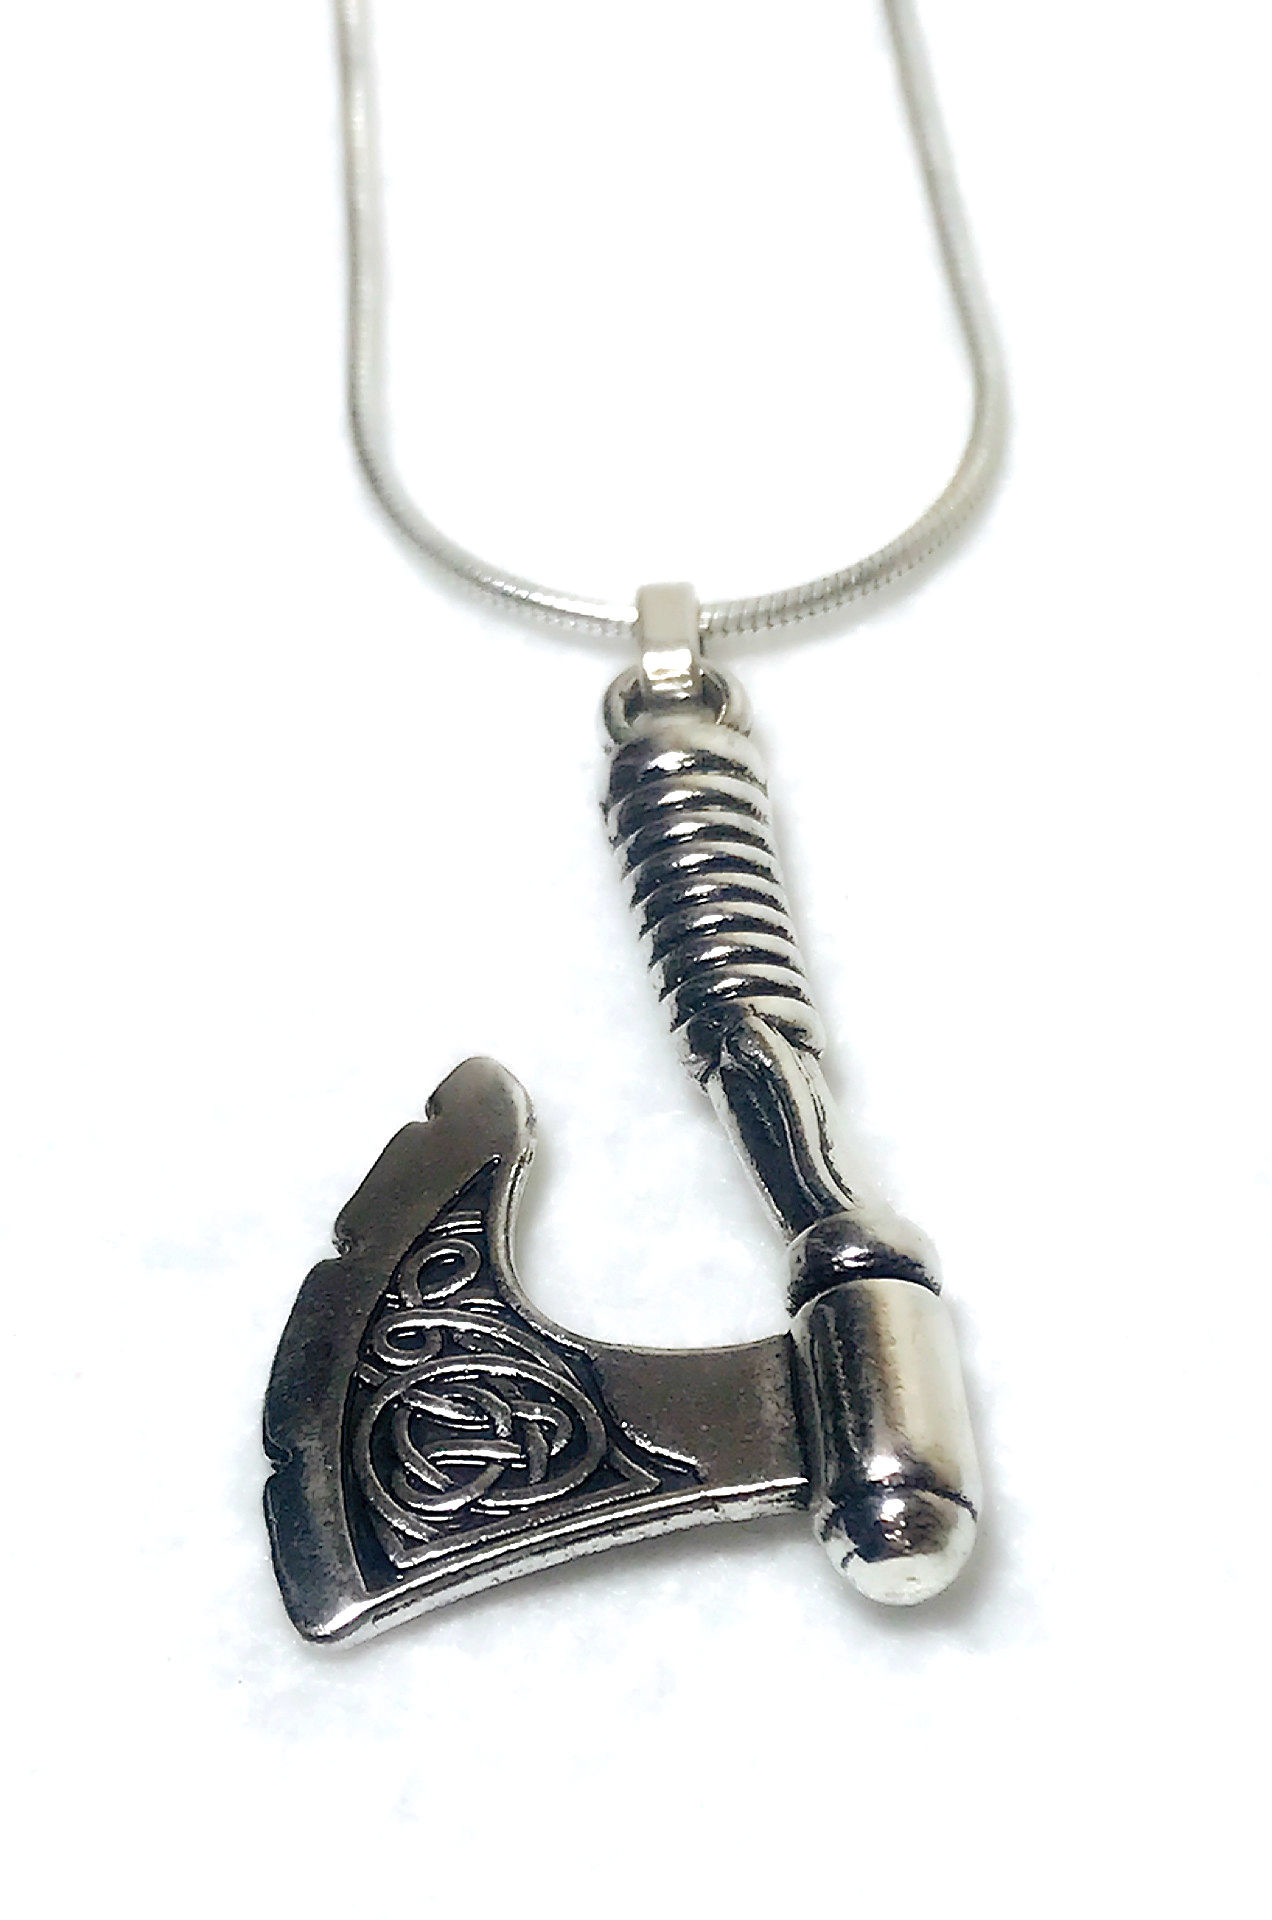 Viking - Silver 925 Pendant For Men - Axe